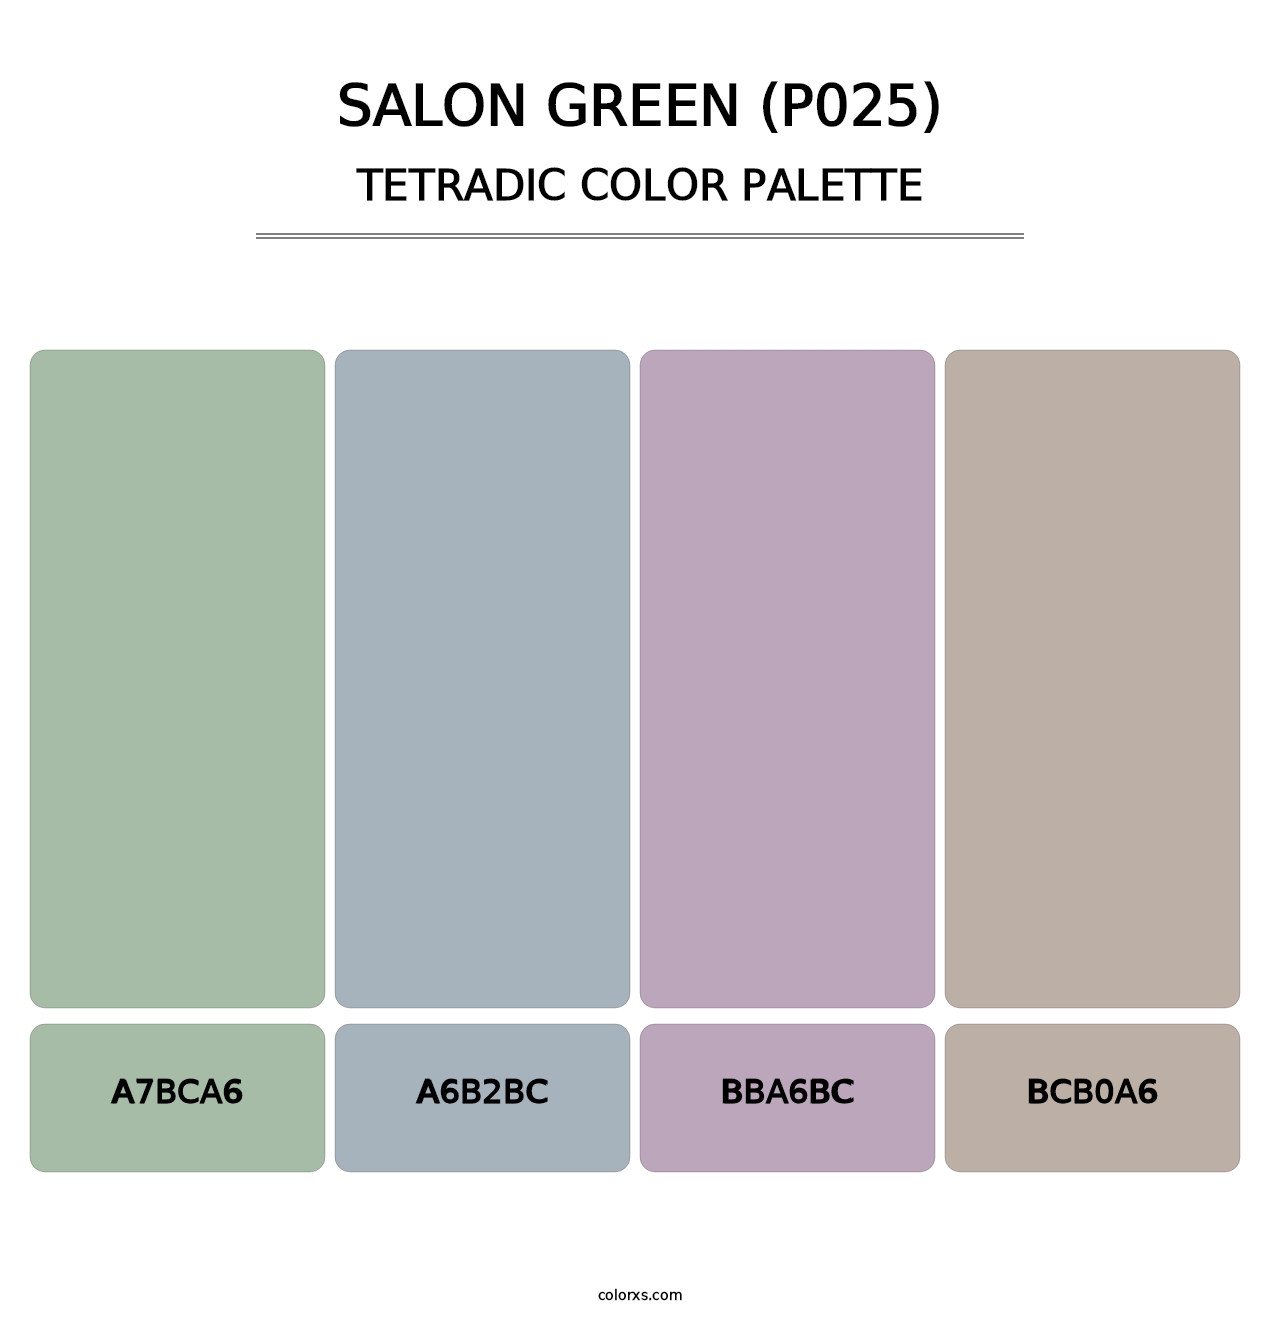 Salon Green (P025) - Tetradic Color Palette